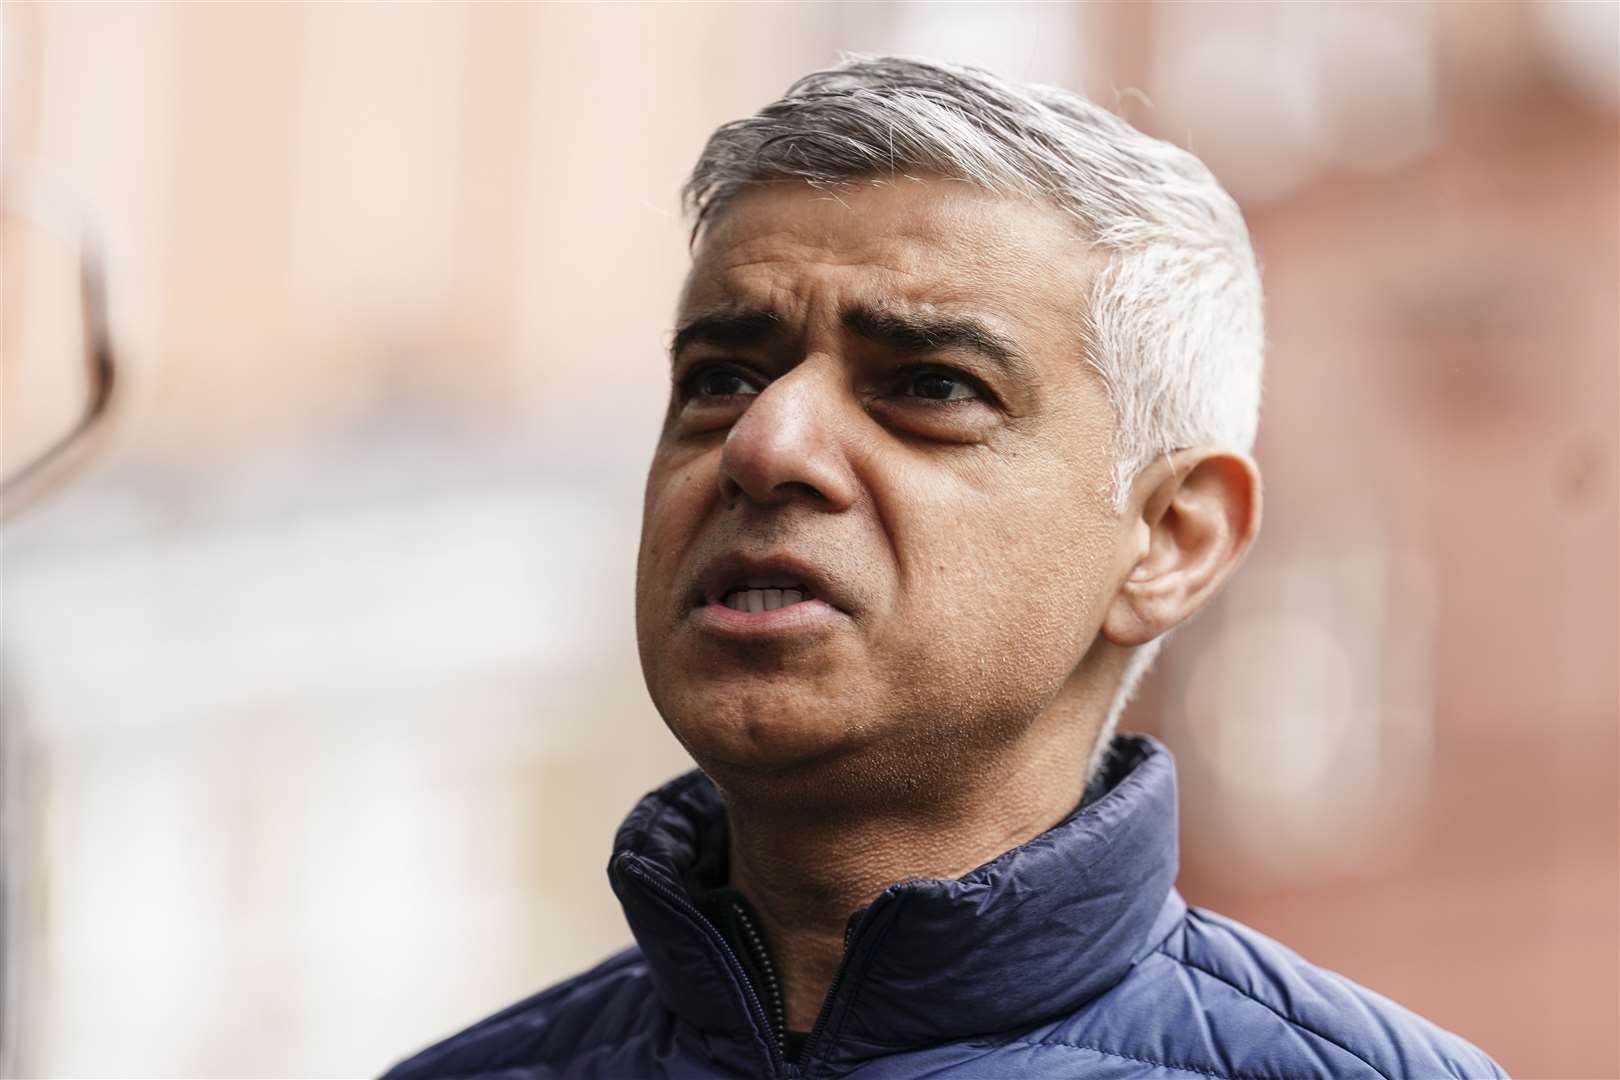 Mayor of London Sadiq Khan said he was ‘disgusted’ by the messages (Jordan Pettitt/PA)